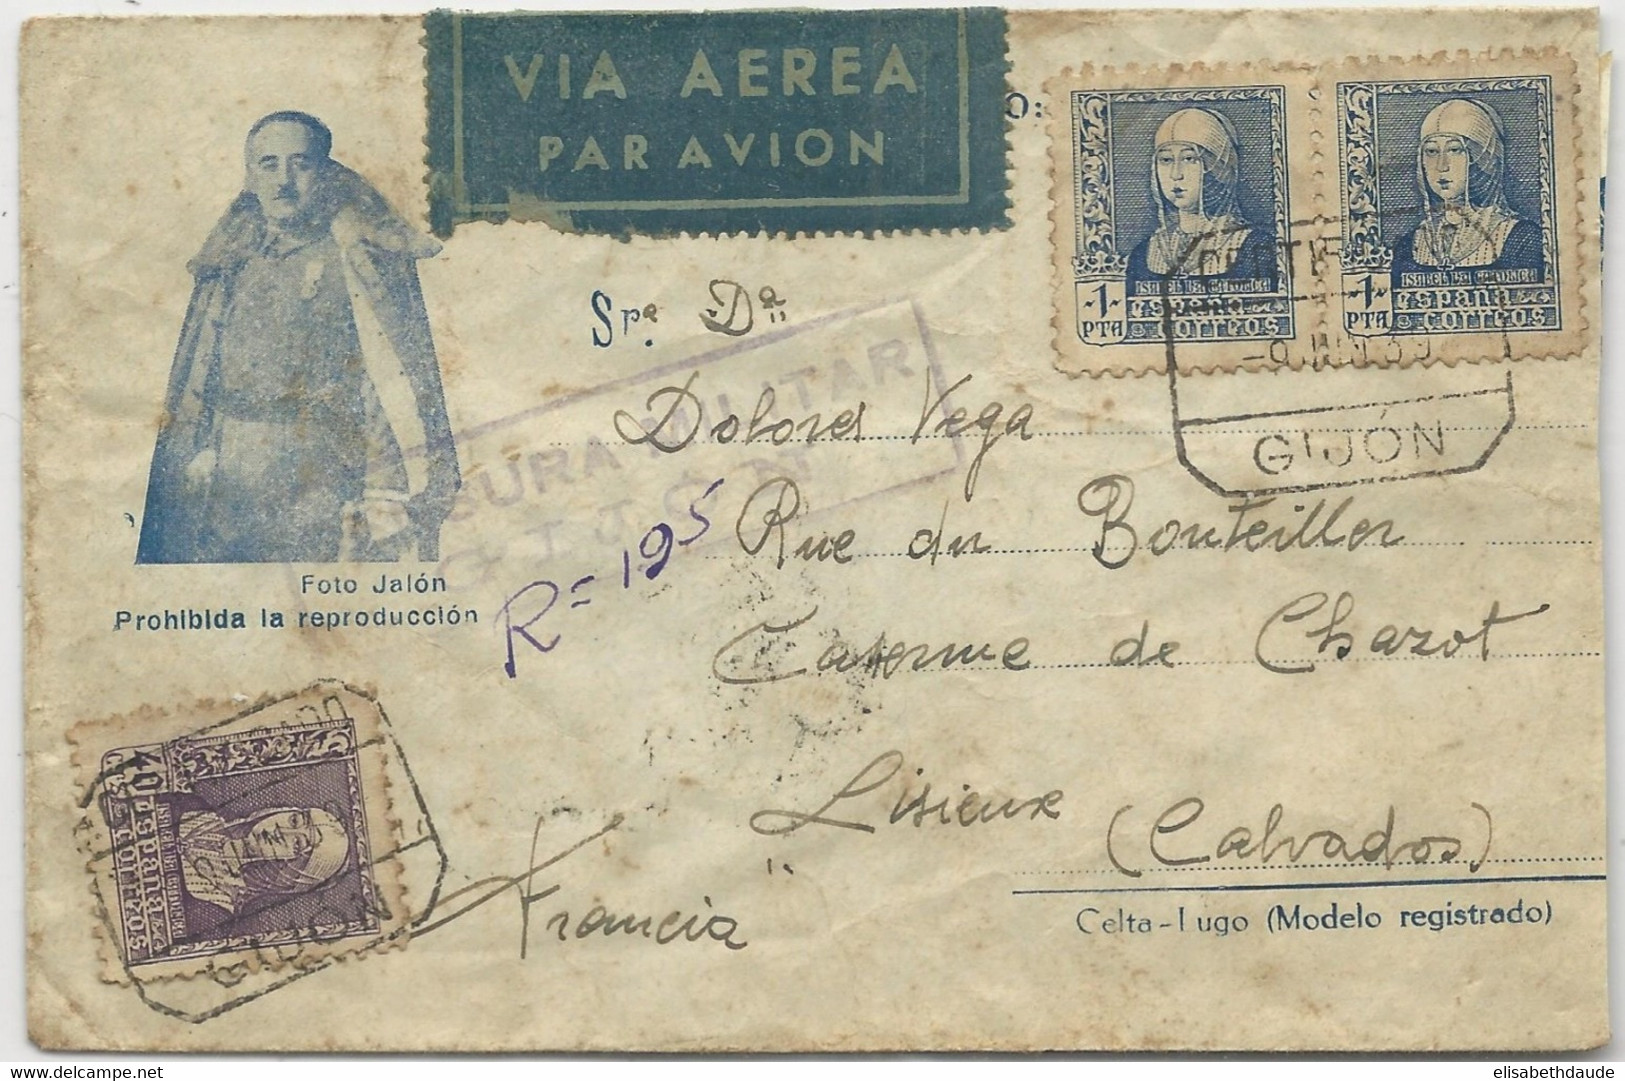 ESPAGNE - 1939 - ENVELOPPE (PROPAGANDE FRANCO) AIRMAIL RECOMMANDEE De GIJON Avec CENSURE  => LISIEUX (CALVADOS) - Nationalistische Zensur